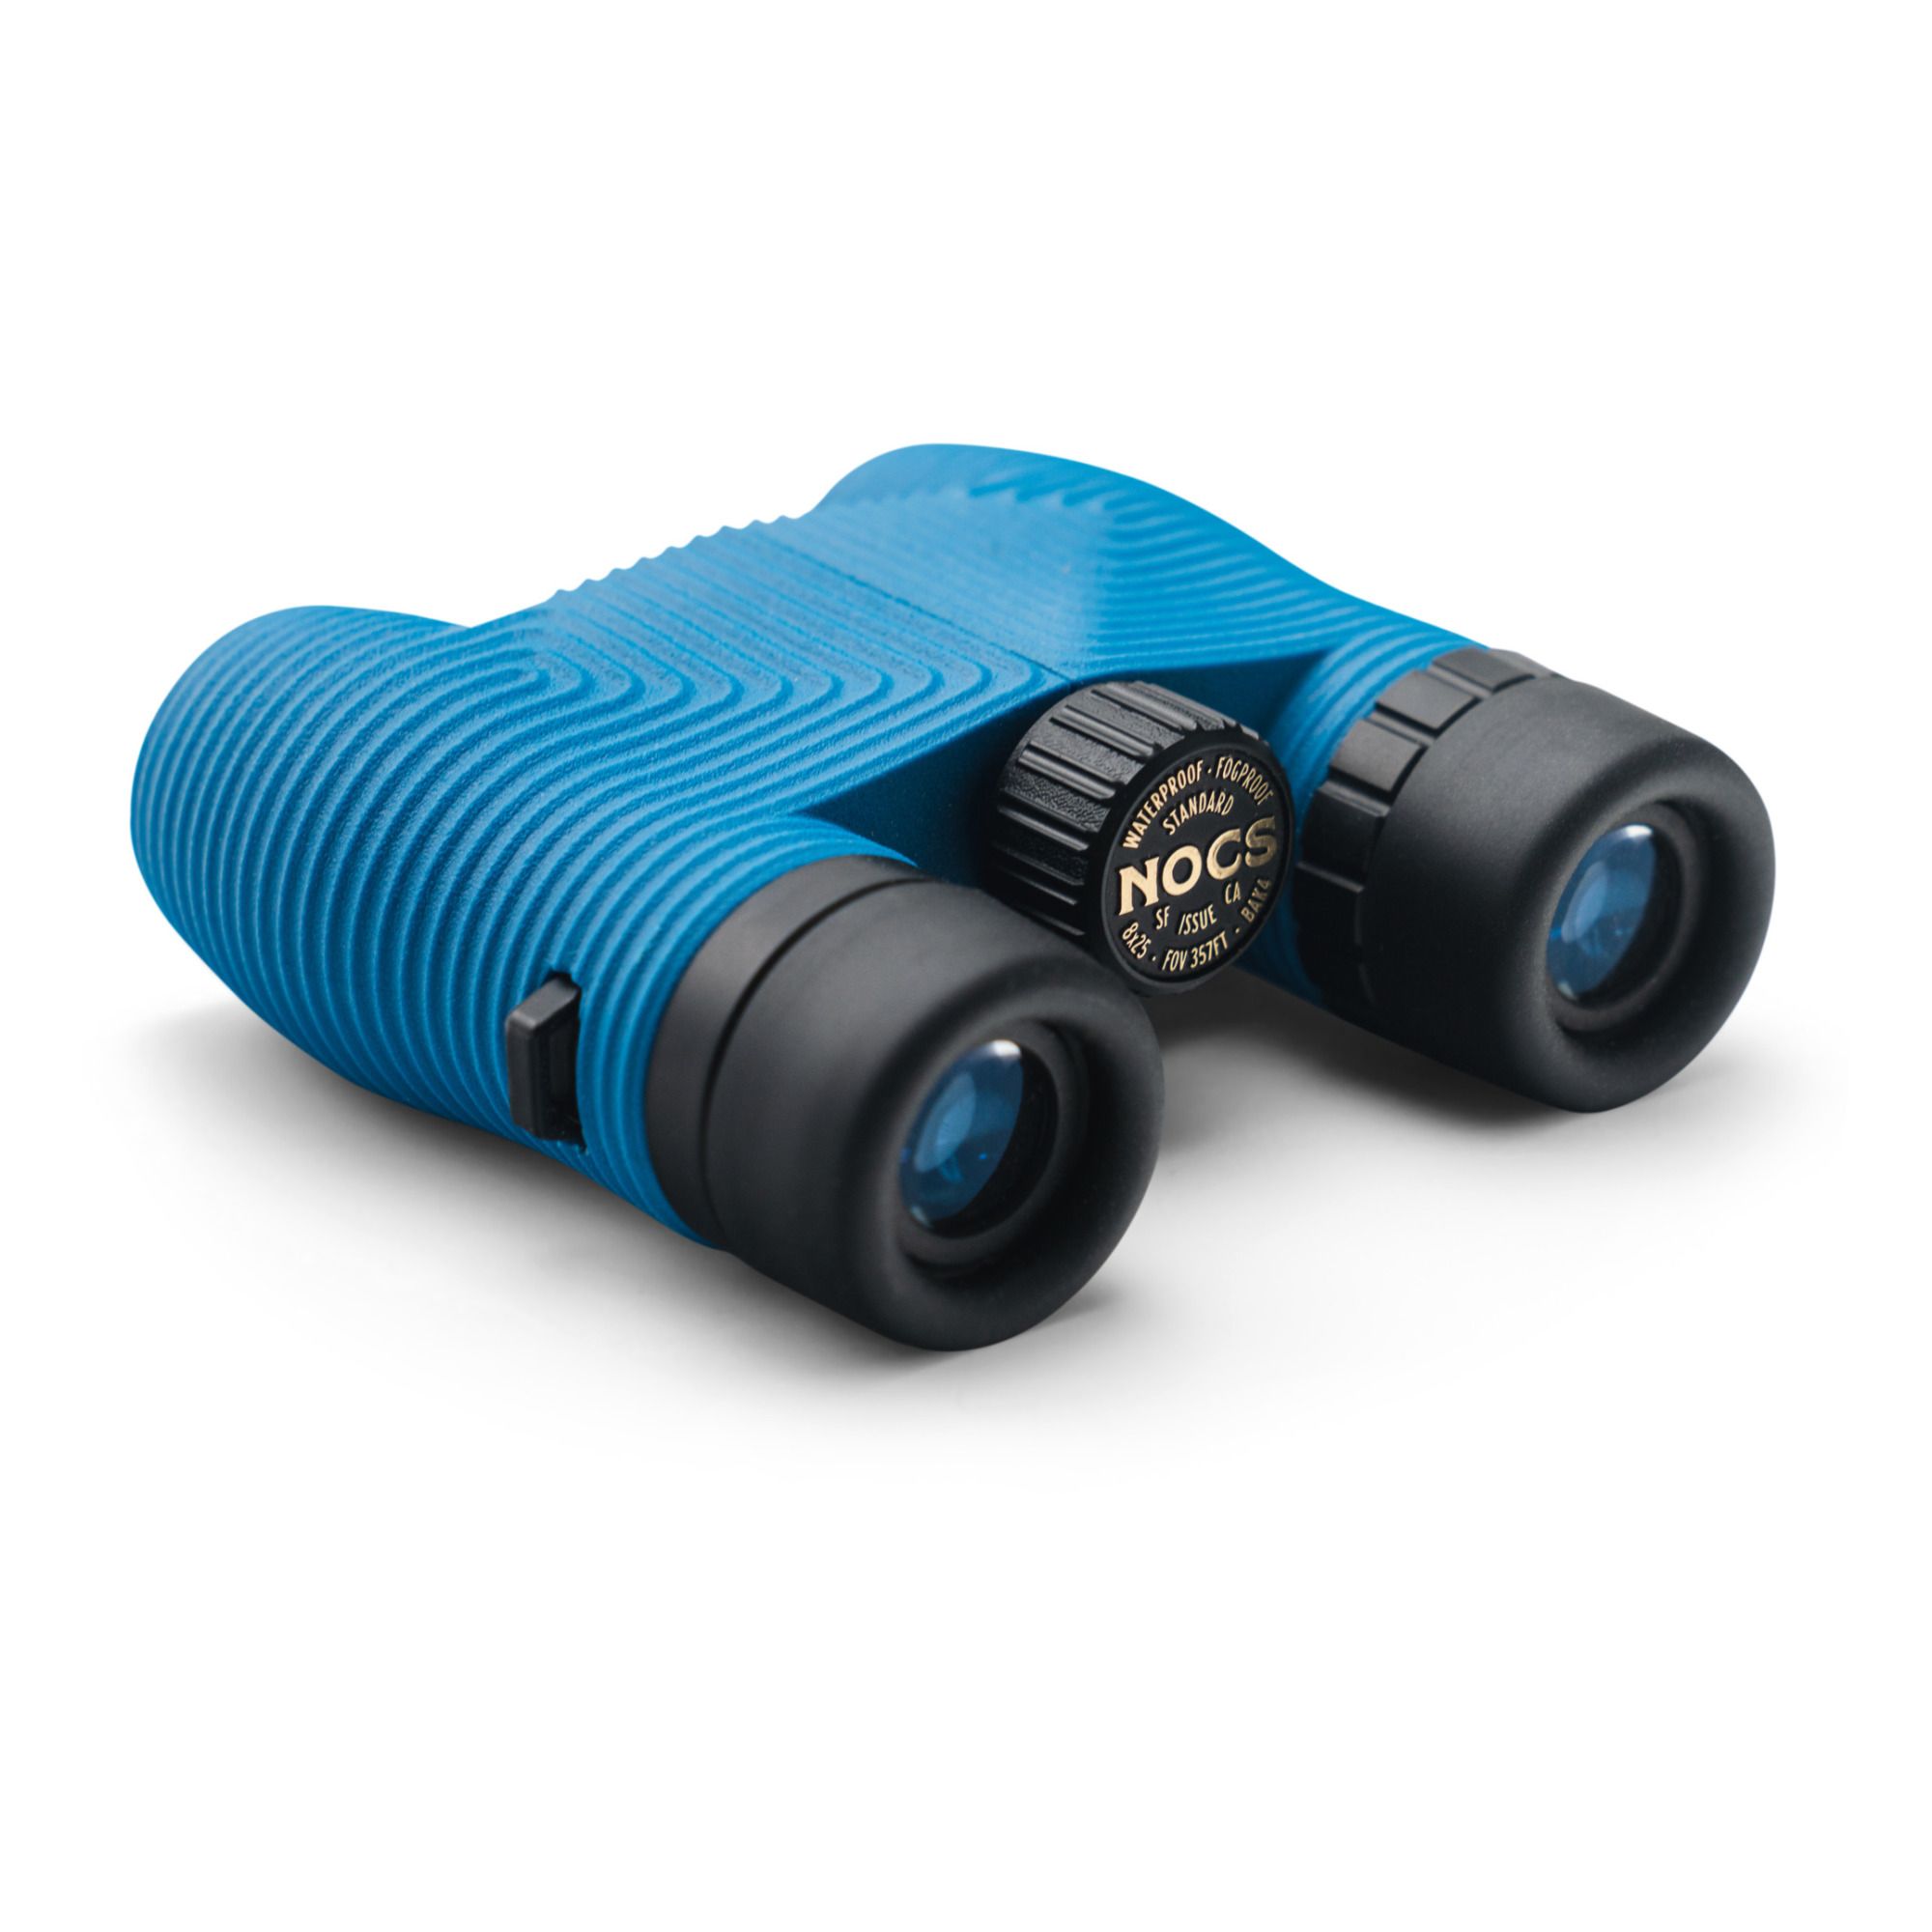 Nocs Provisions - Jumelles waterproof Binoculars - Bleu